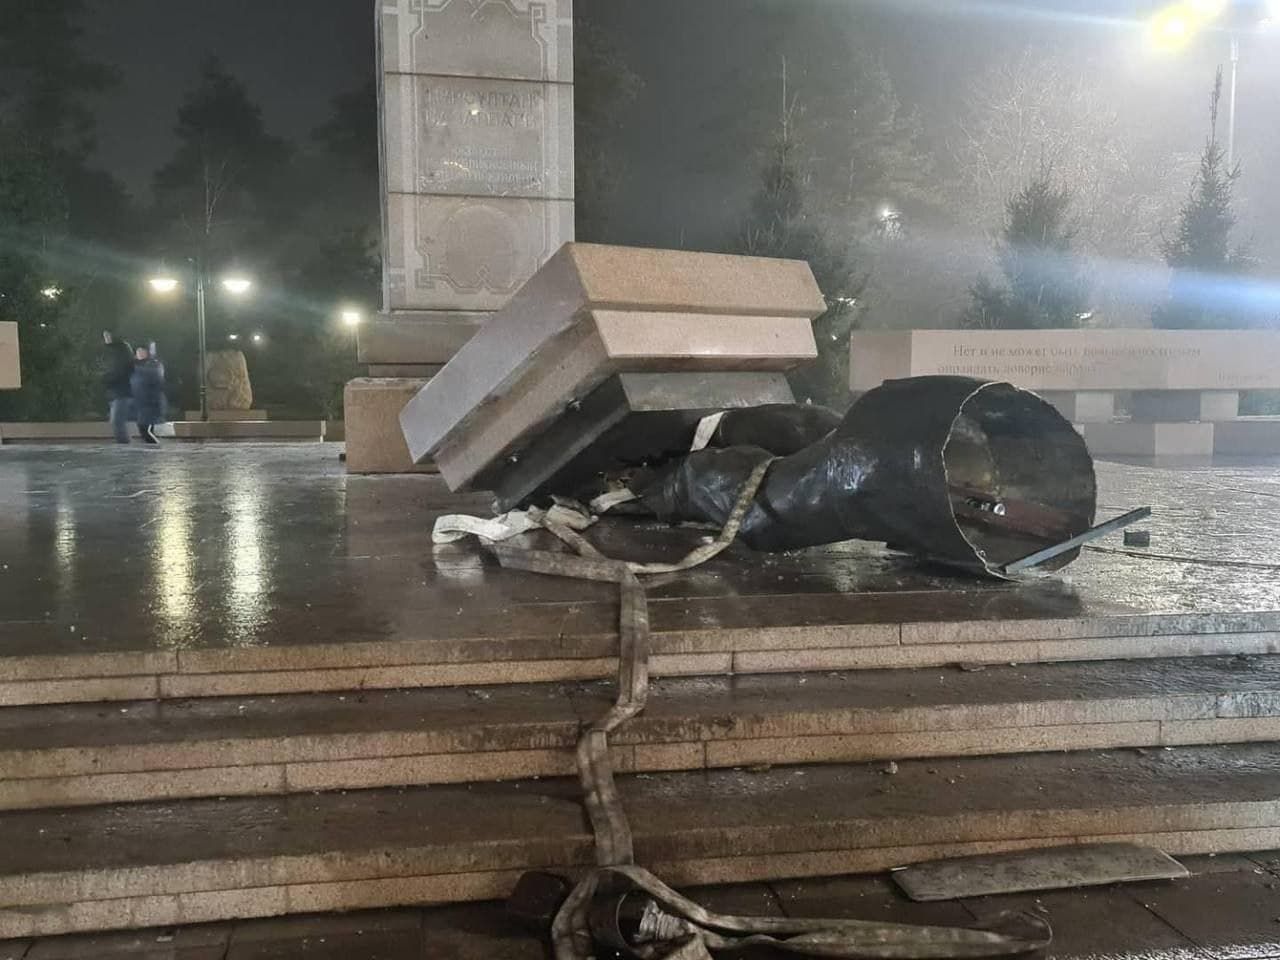 Памятник Назарбаеву не устоял под натиском протестующих: фото разрушенного монумента 